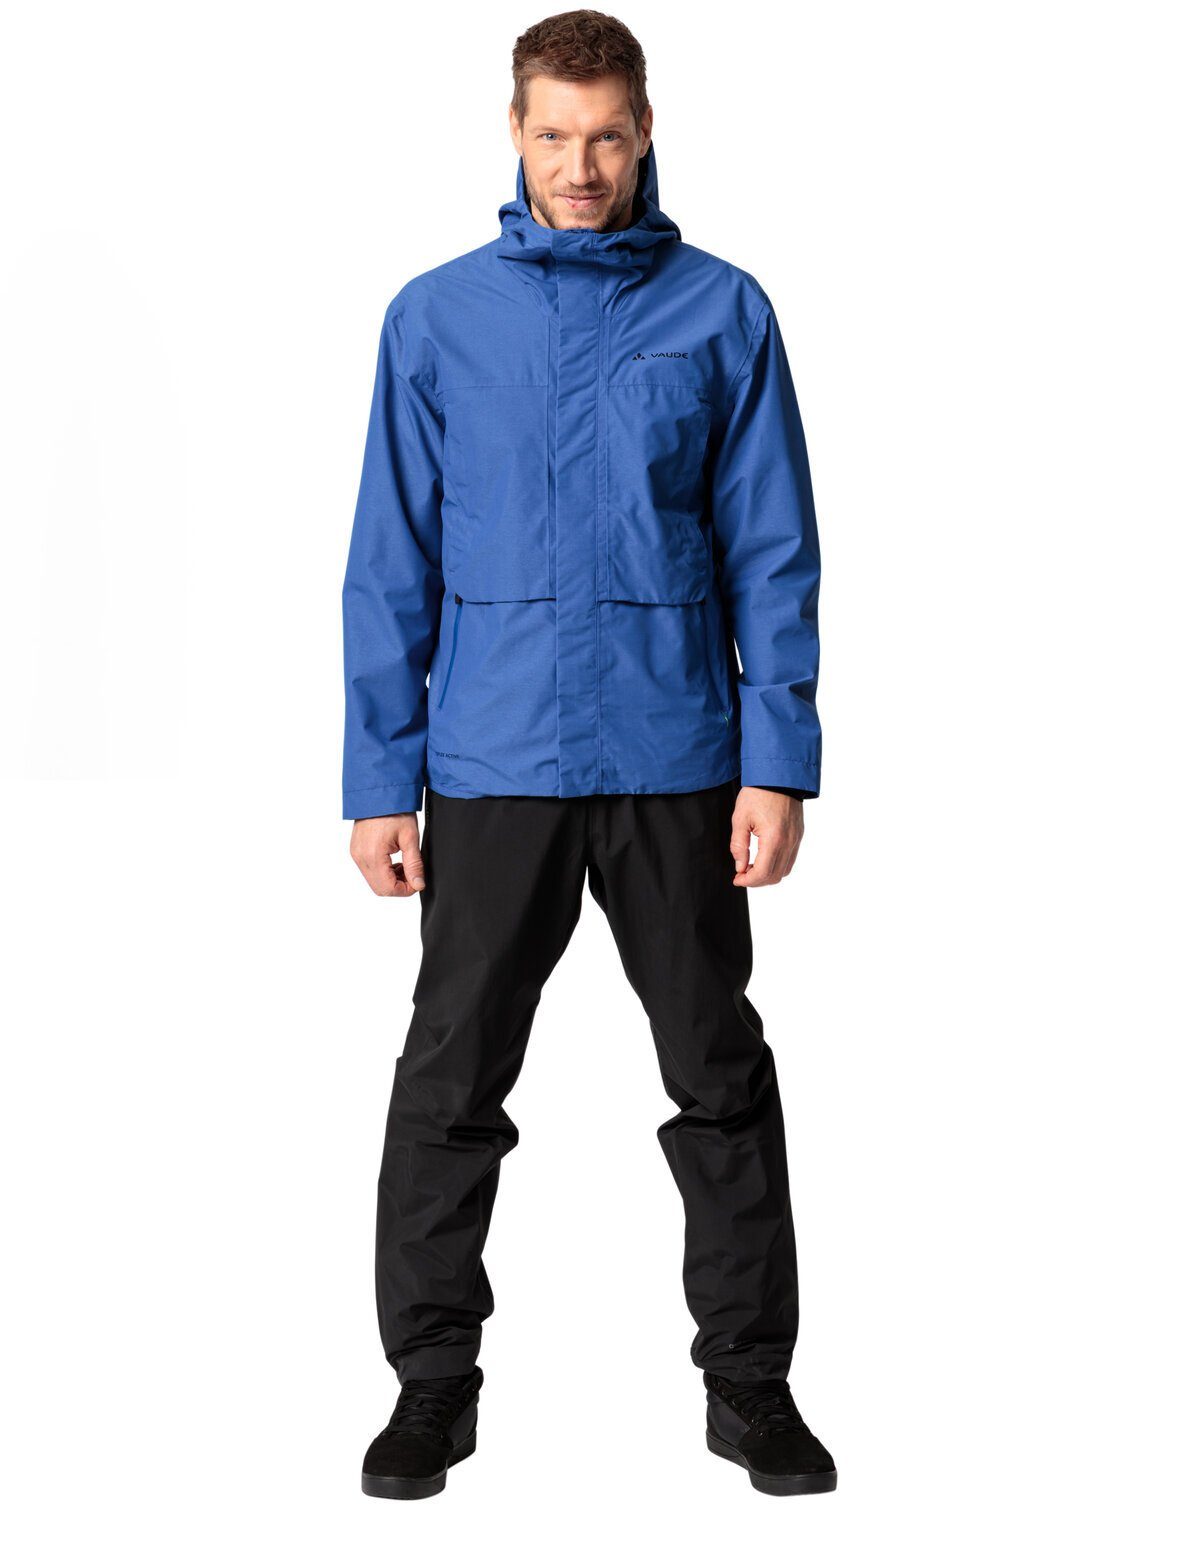 Outdoorjacke Comyou royal Jacket kompensiert Men's Rain (1-St) VAUDE Pro Klimaneutral